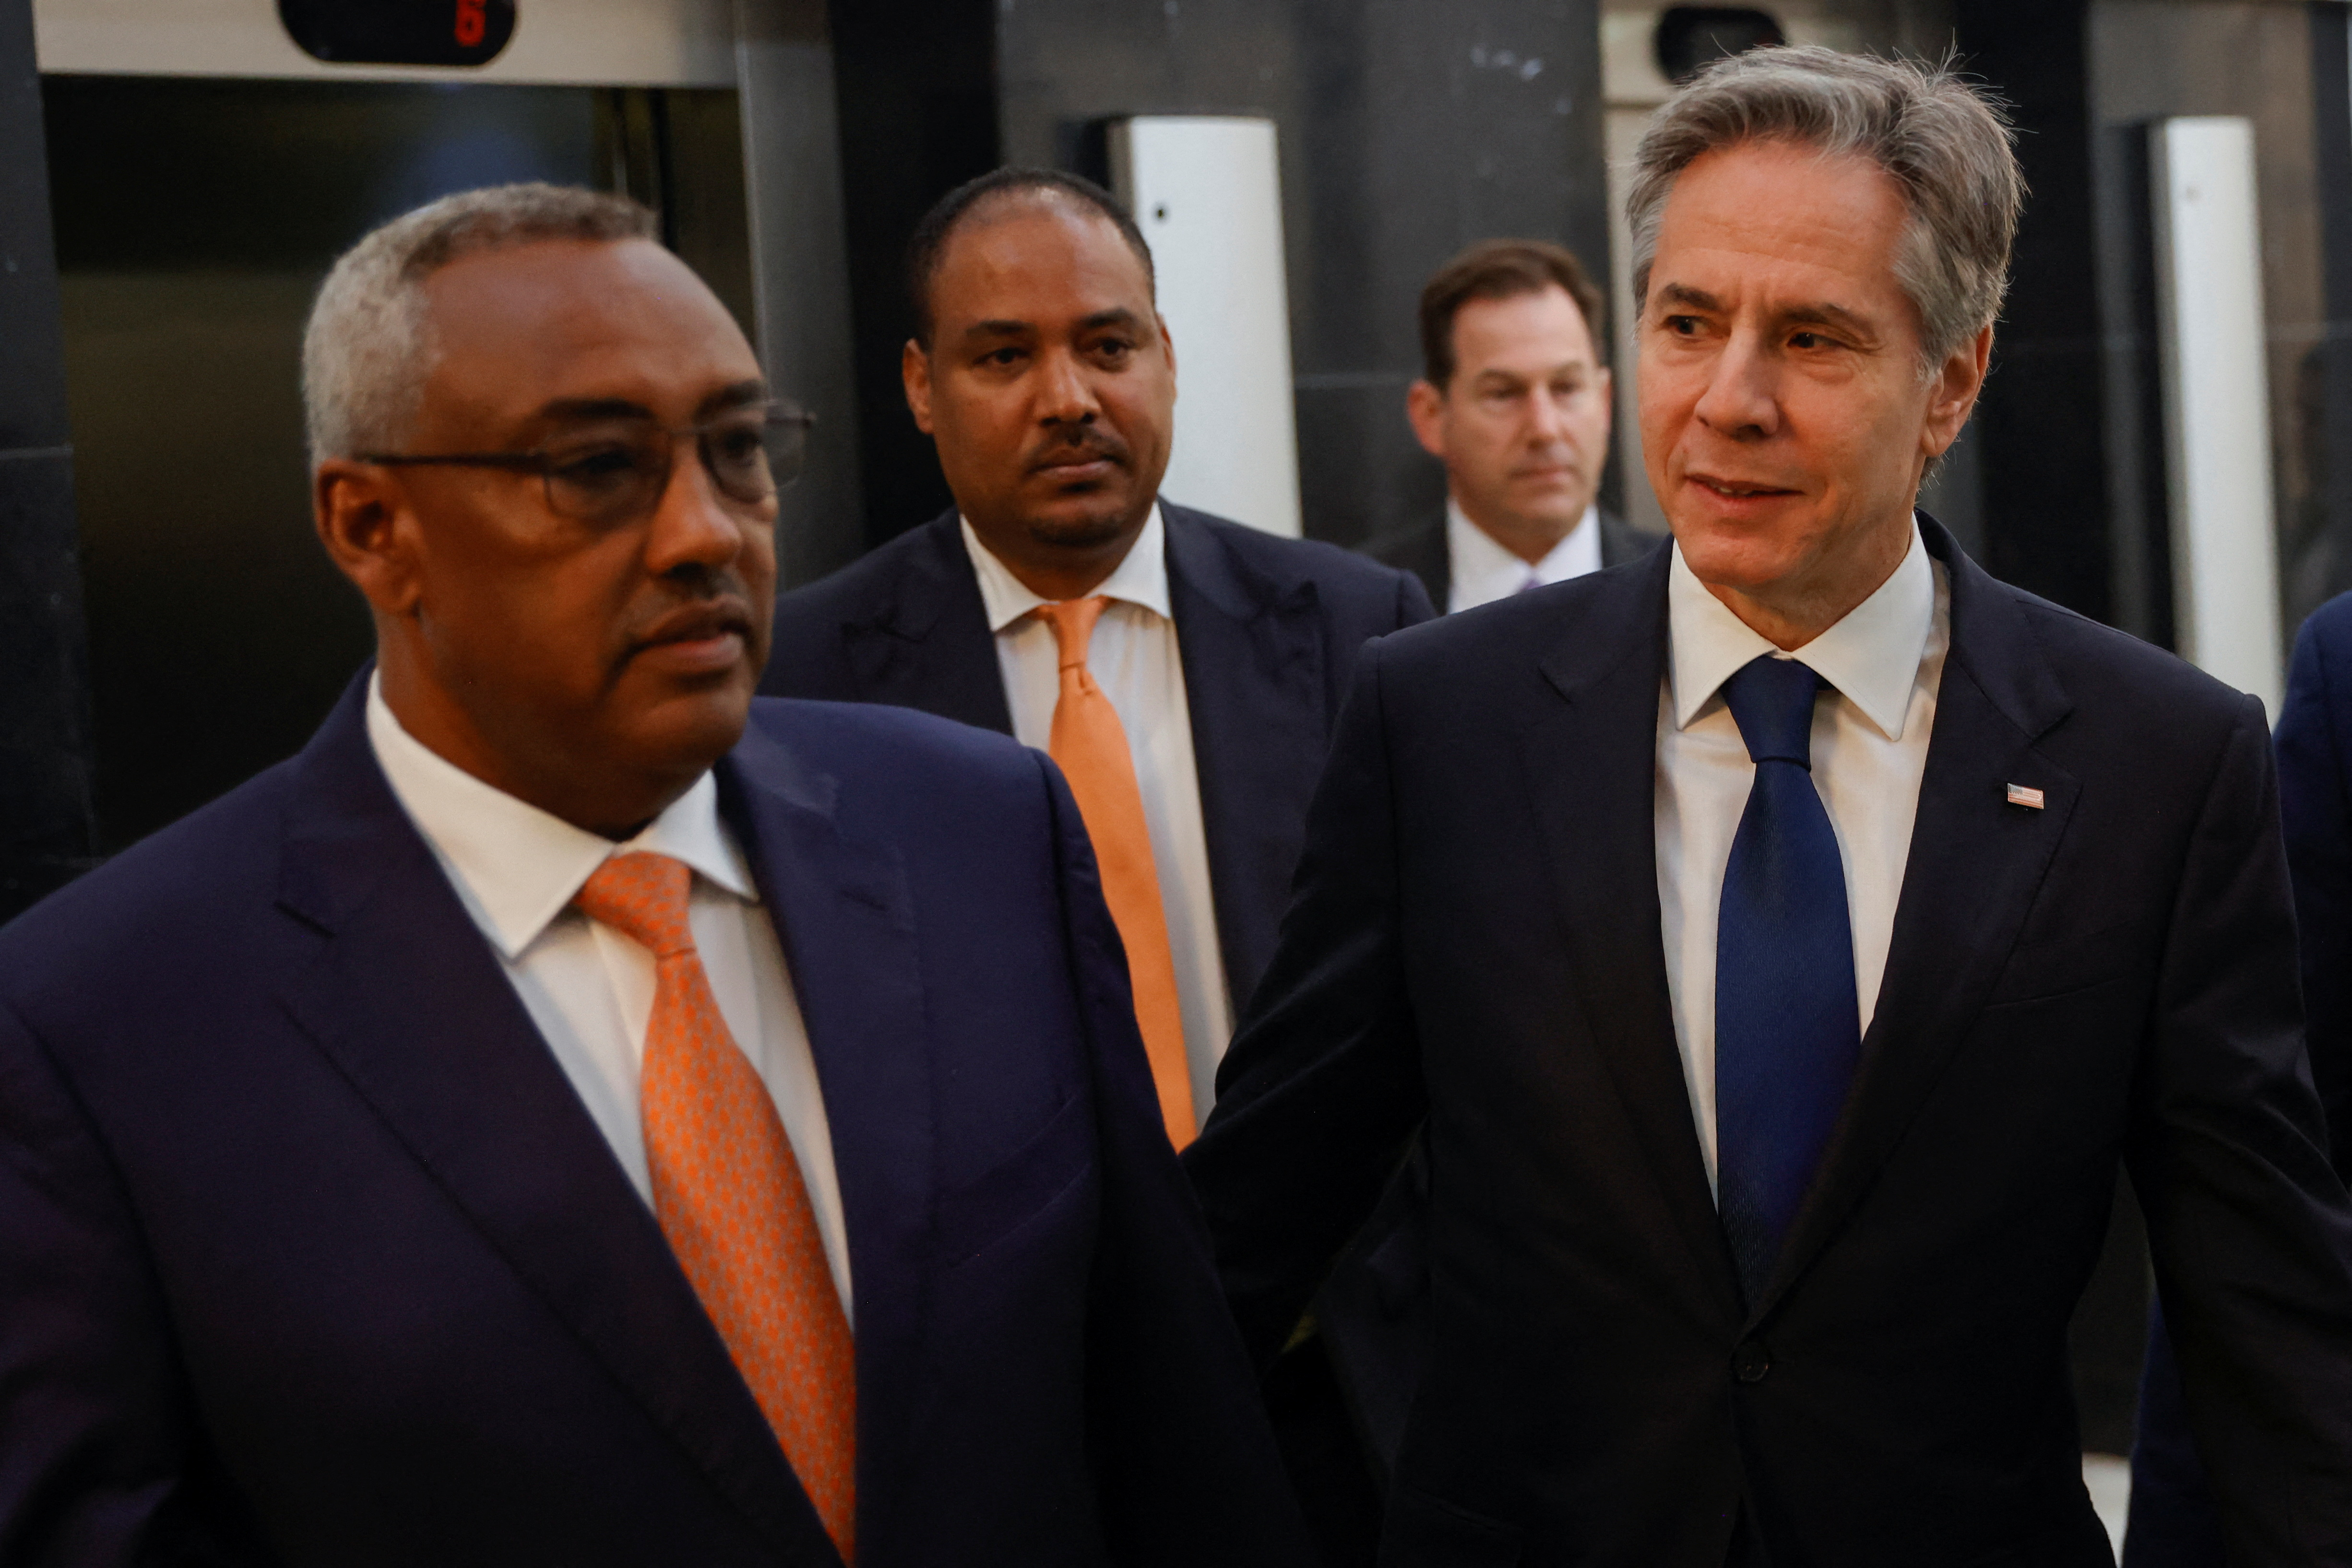 U.S. Secretary of State Blinken visits Ethiopia